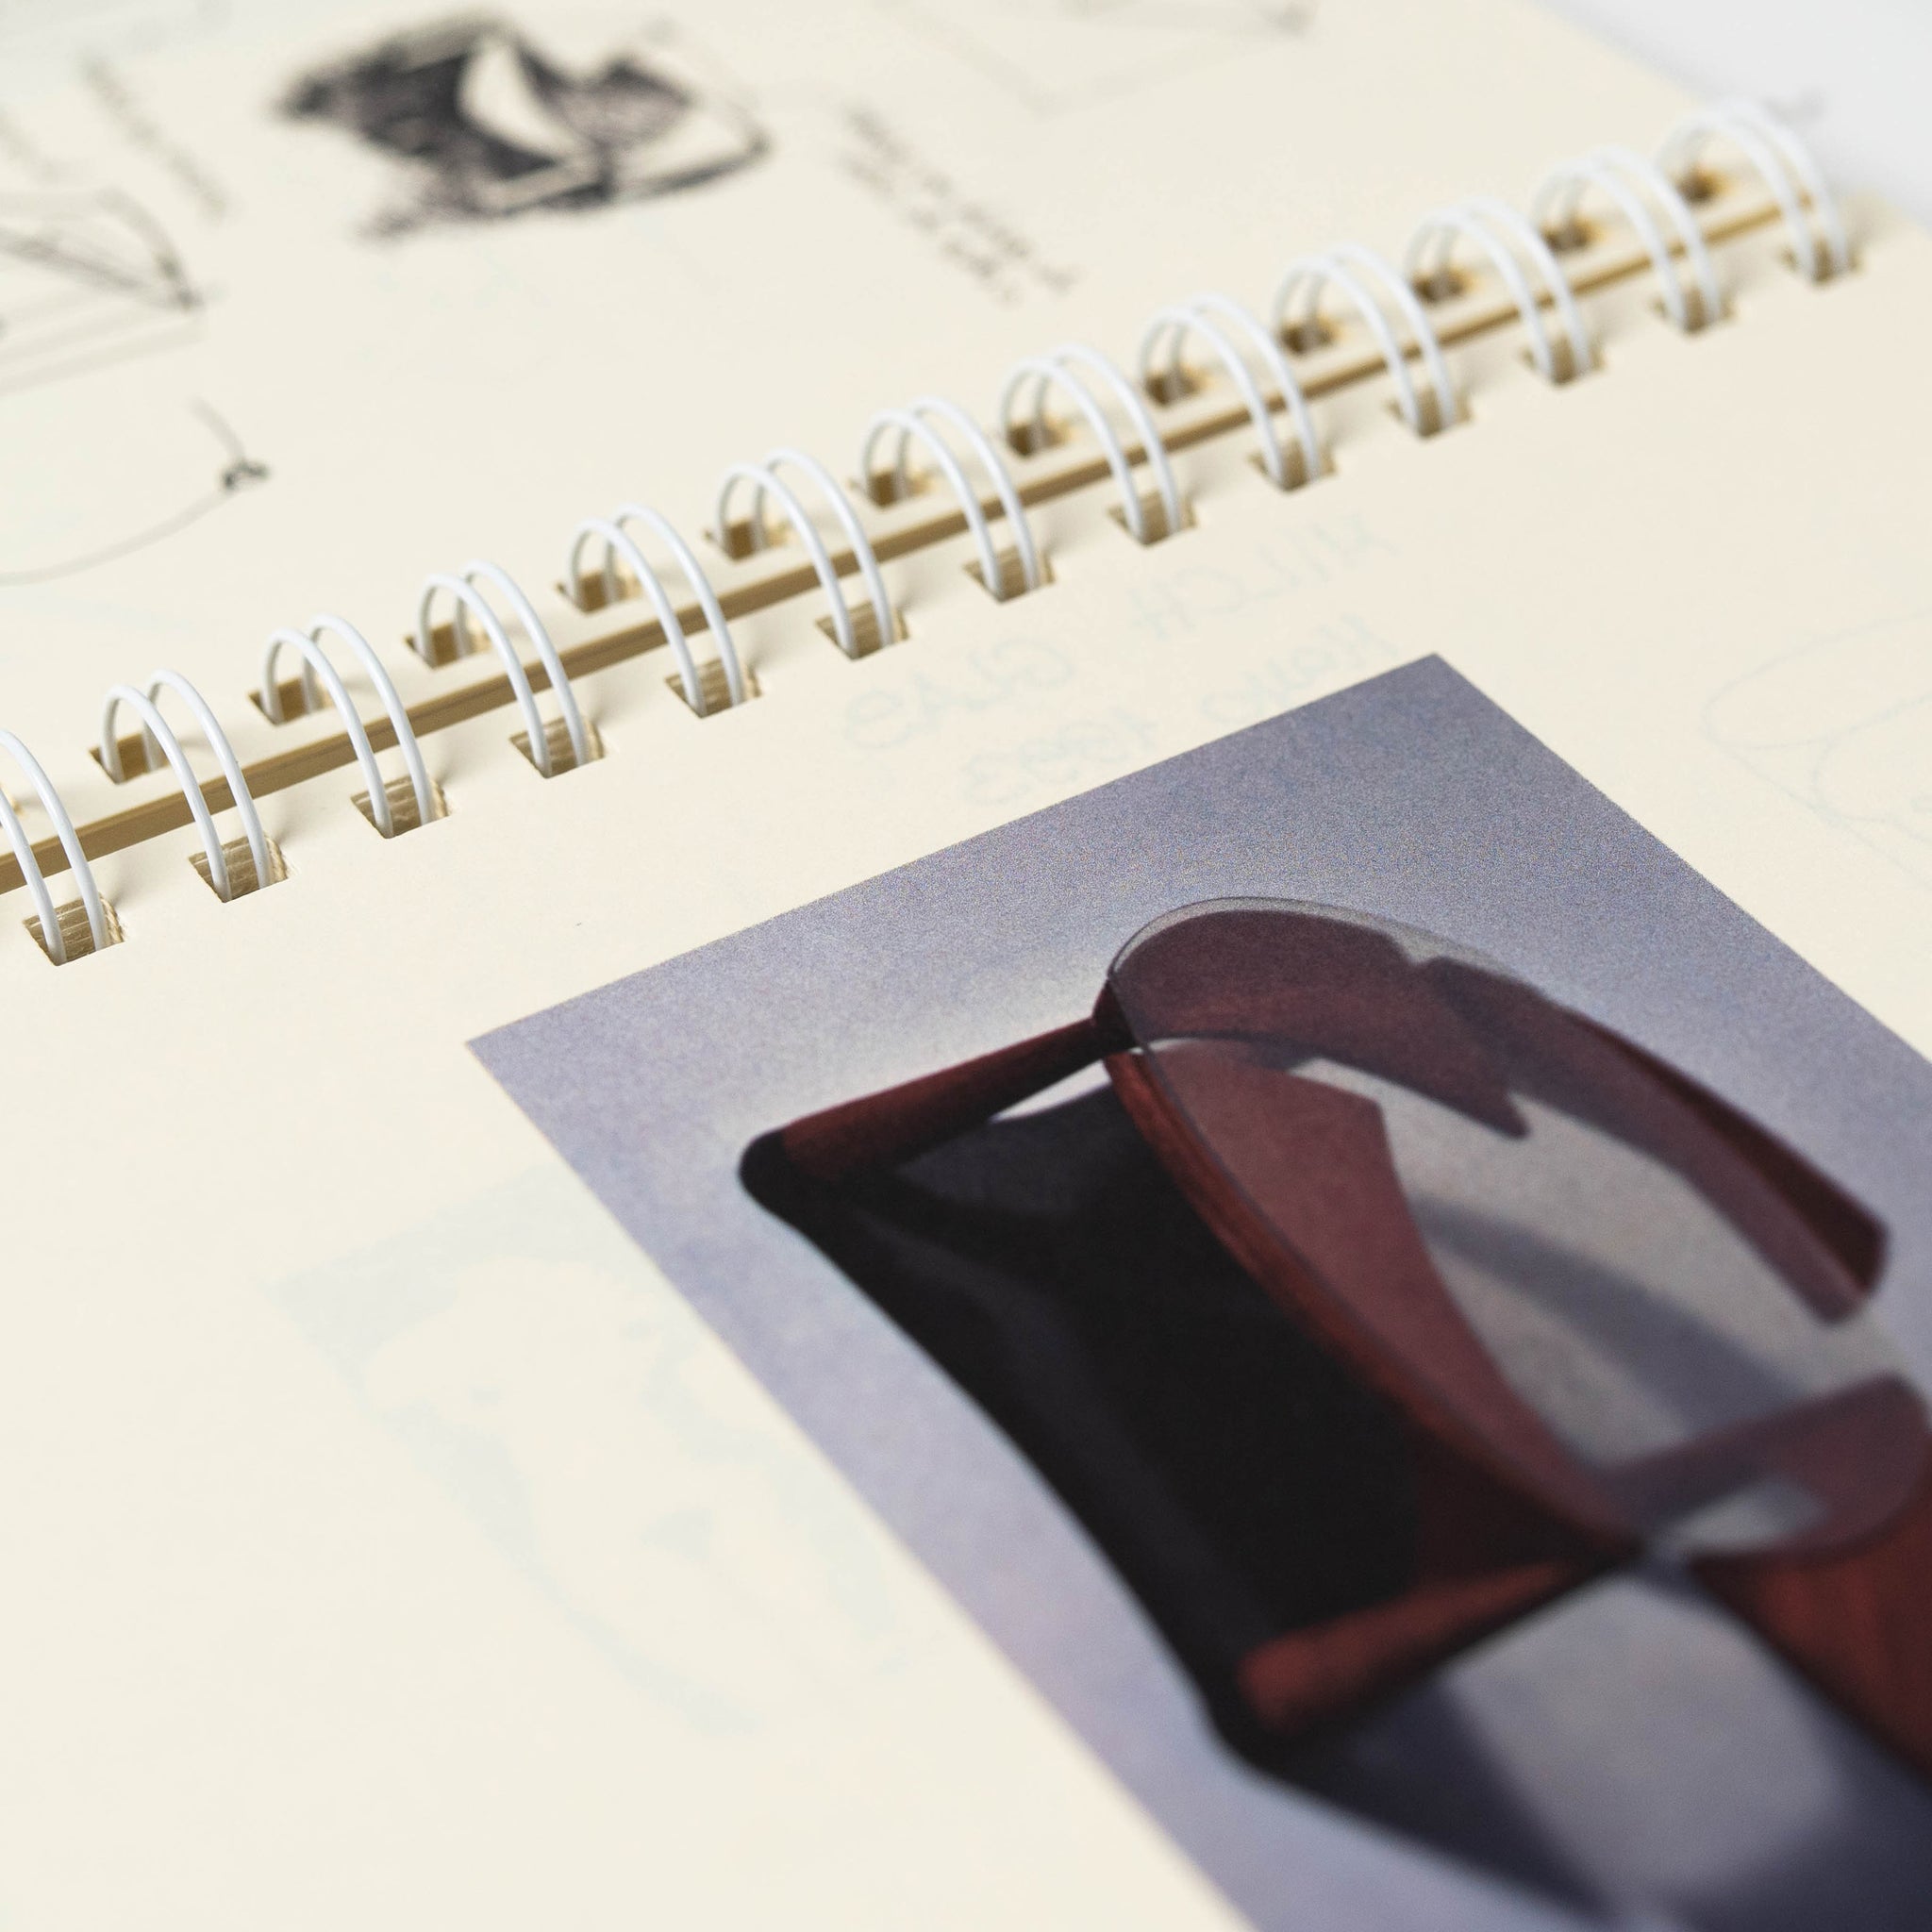 Sketchbook: The Industrial Design Of Oscar Tusquets Blanca